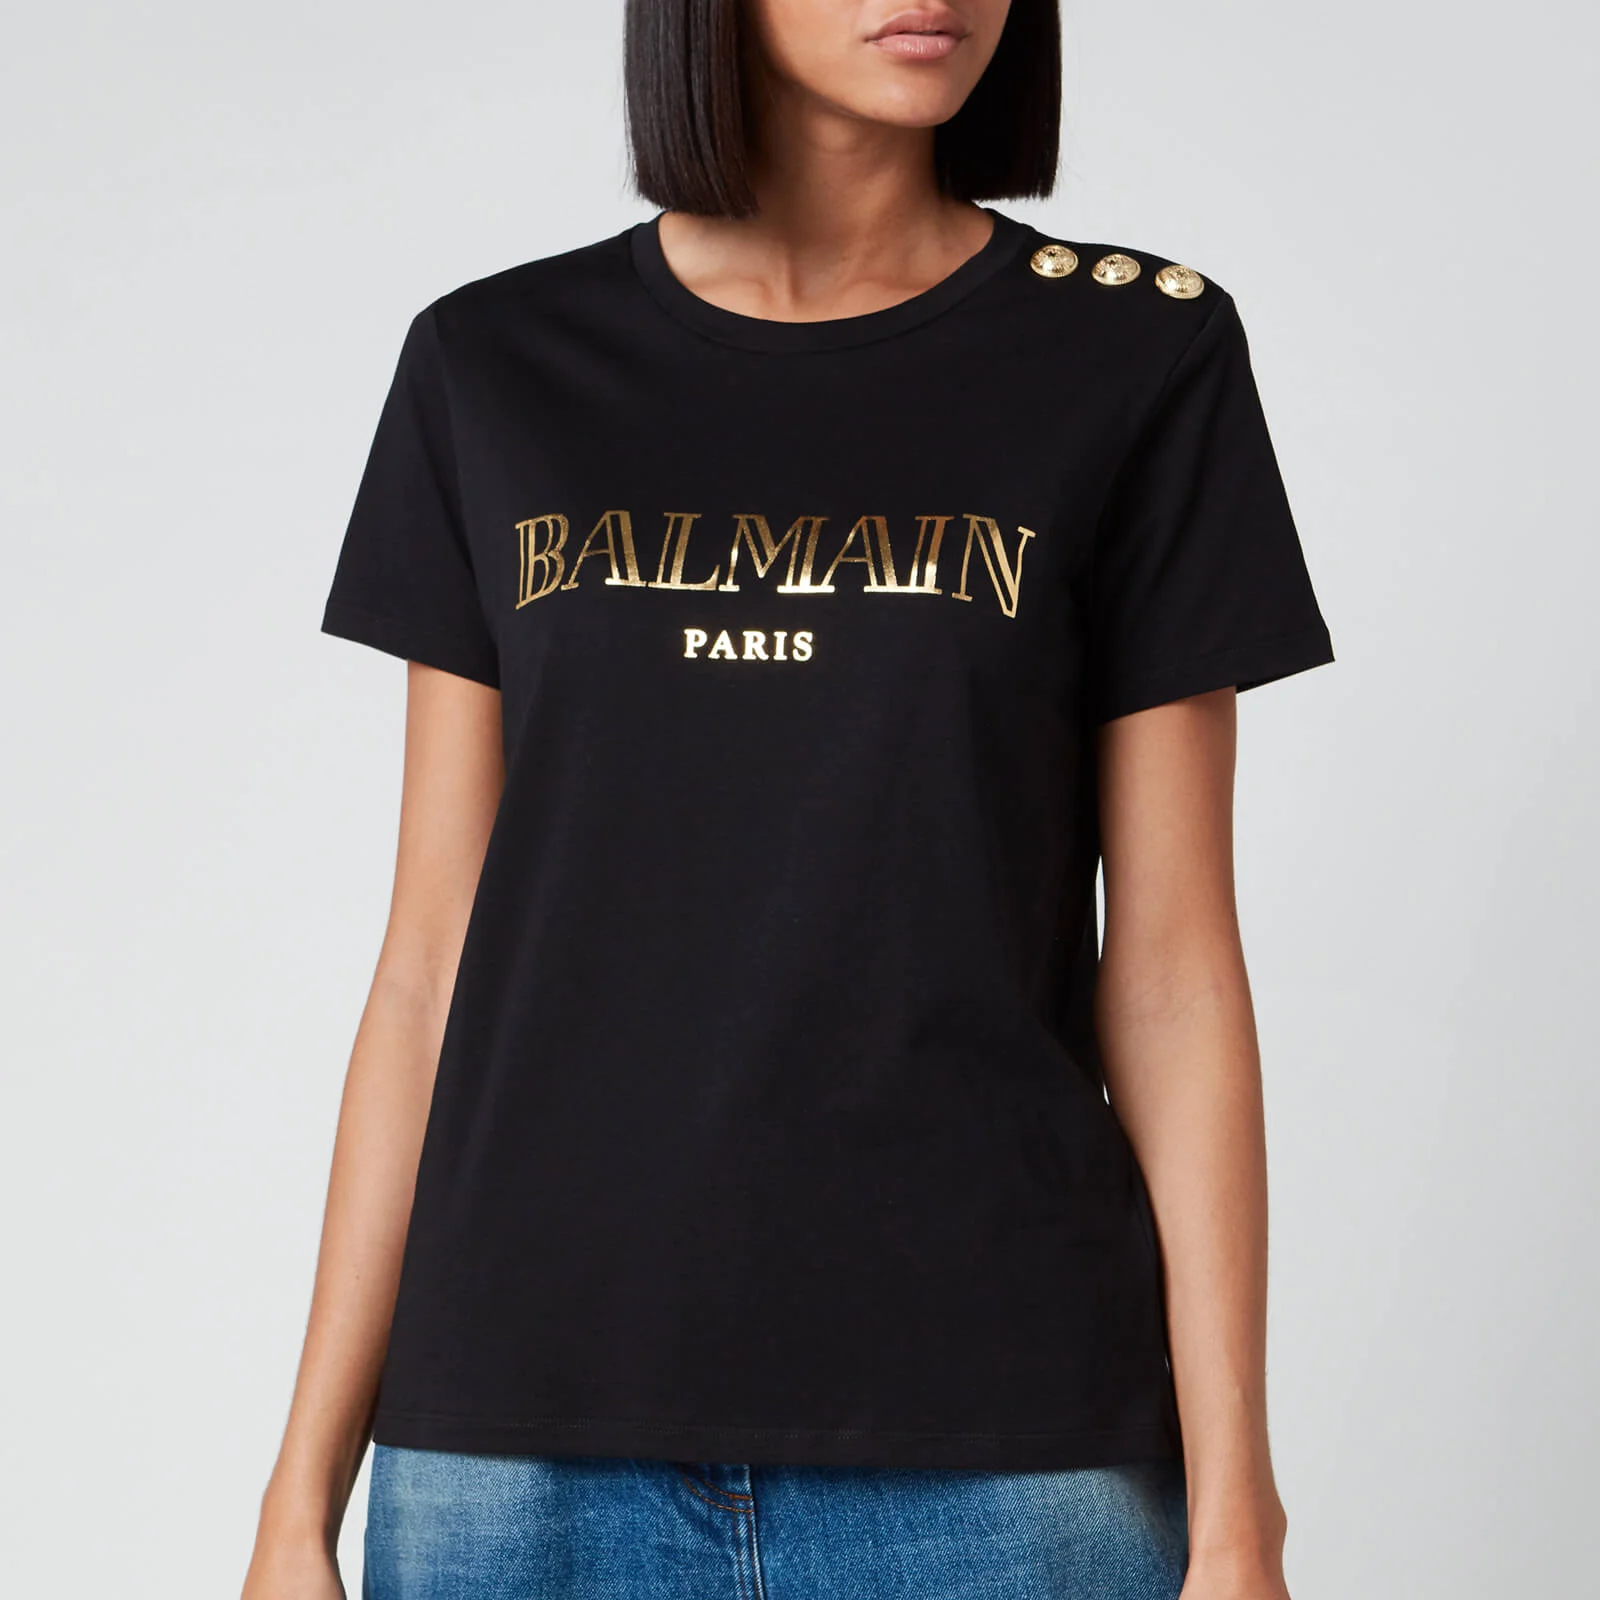 Balmain Women's Short Sleeve 3 Button Vintage Logo T-Shirt - Black Image 1